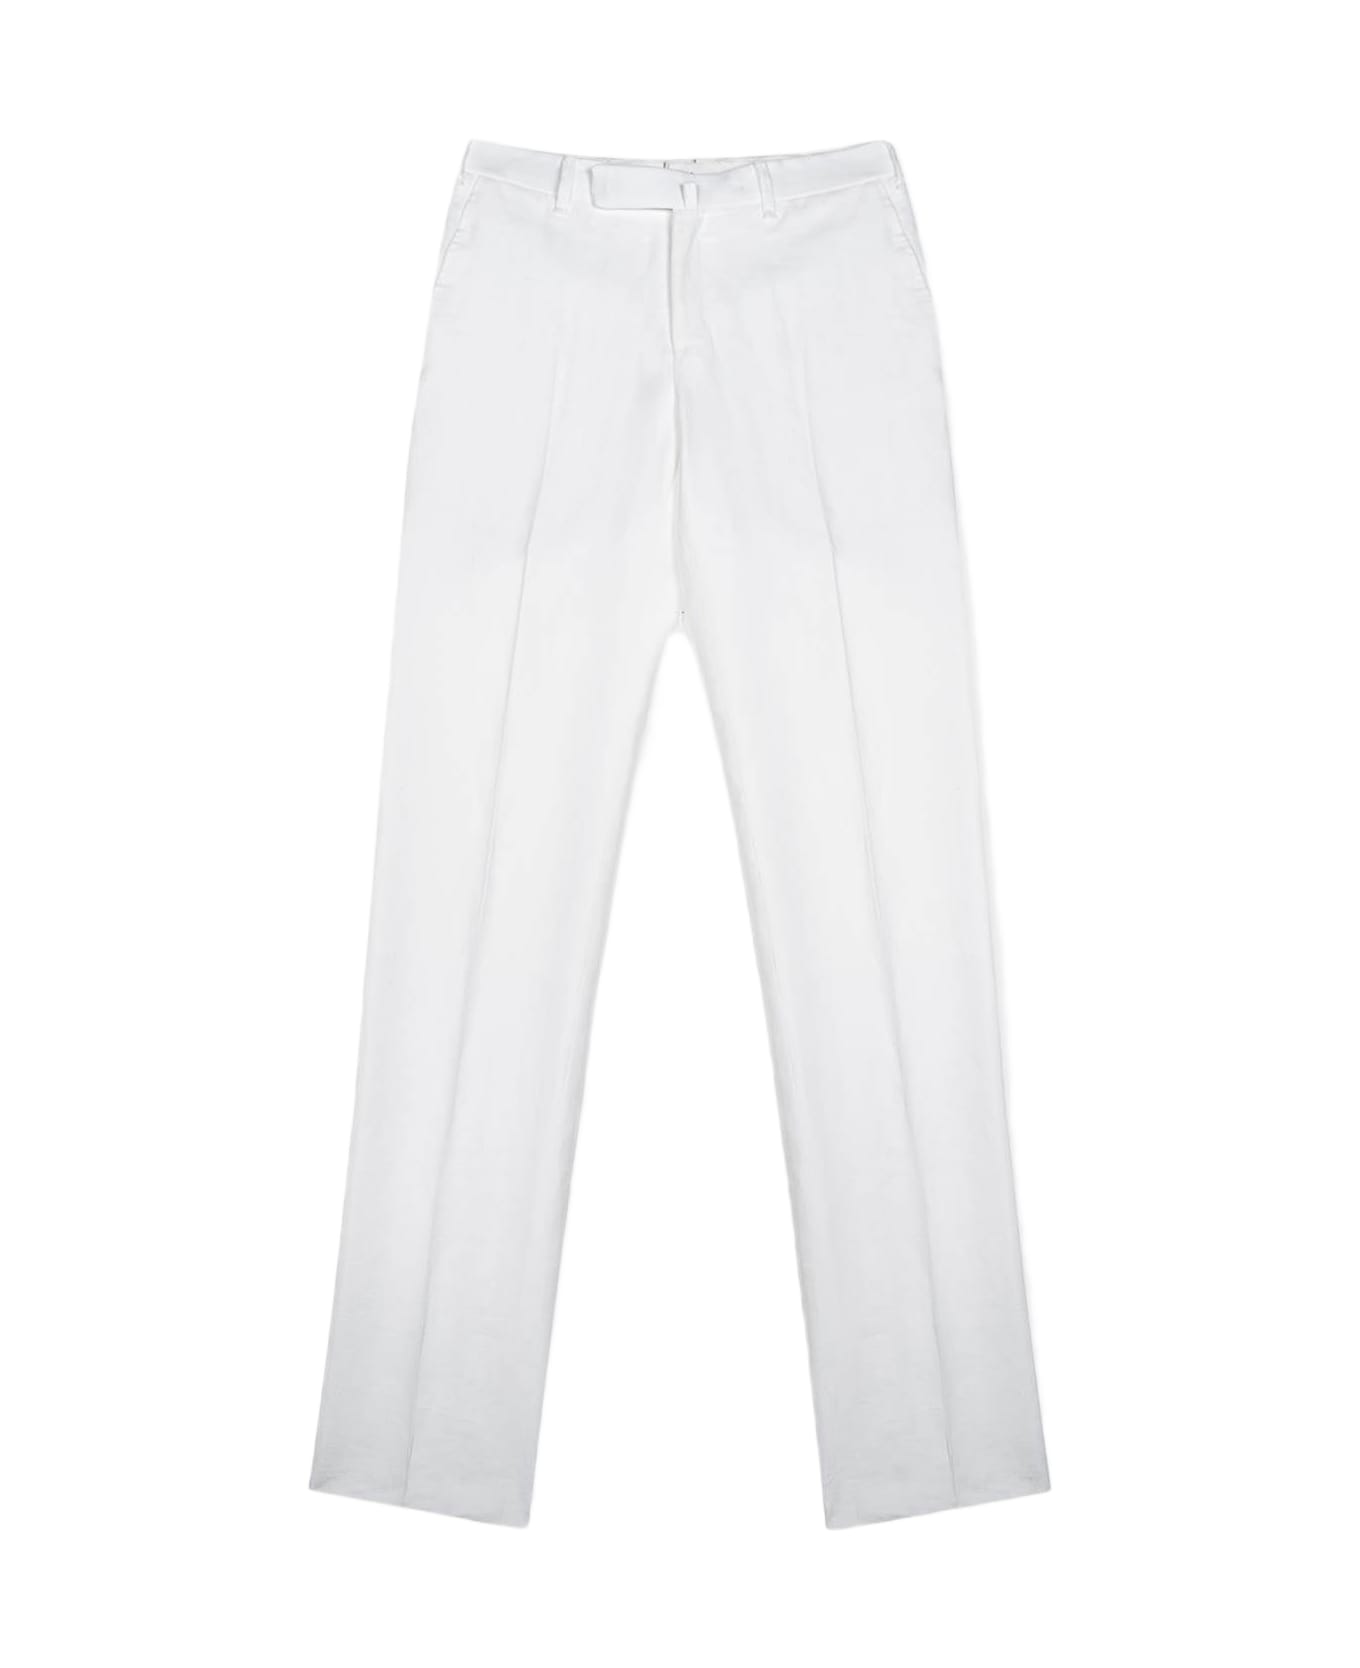 Larusmiani Handmade Trousers 'portofino' Pants - White